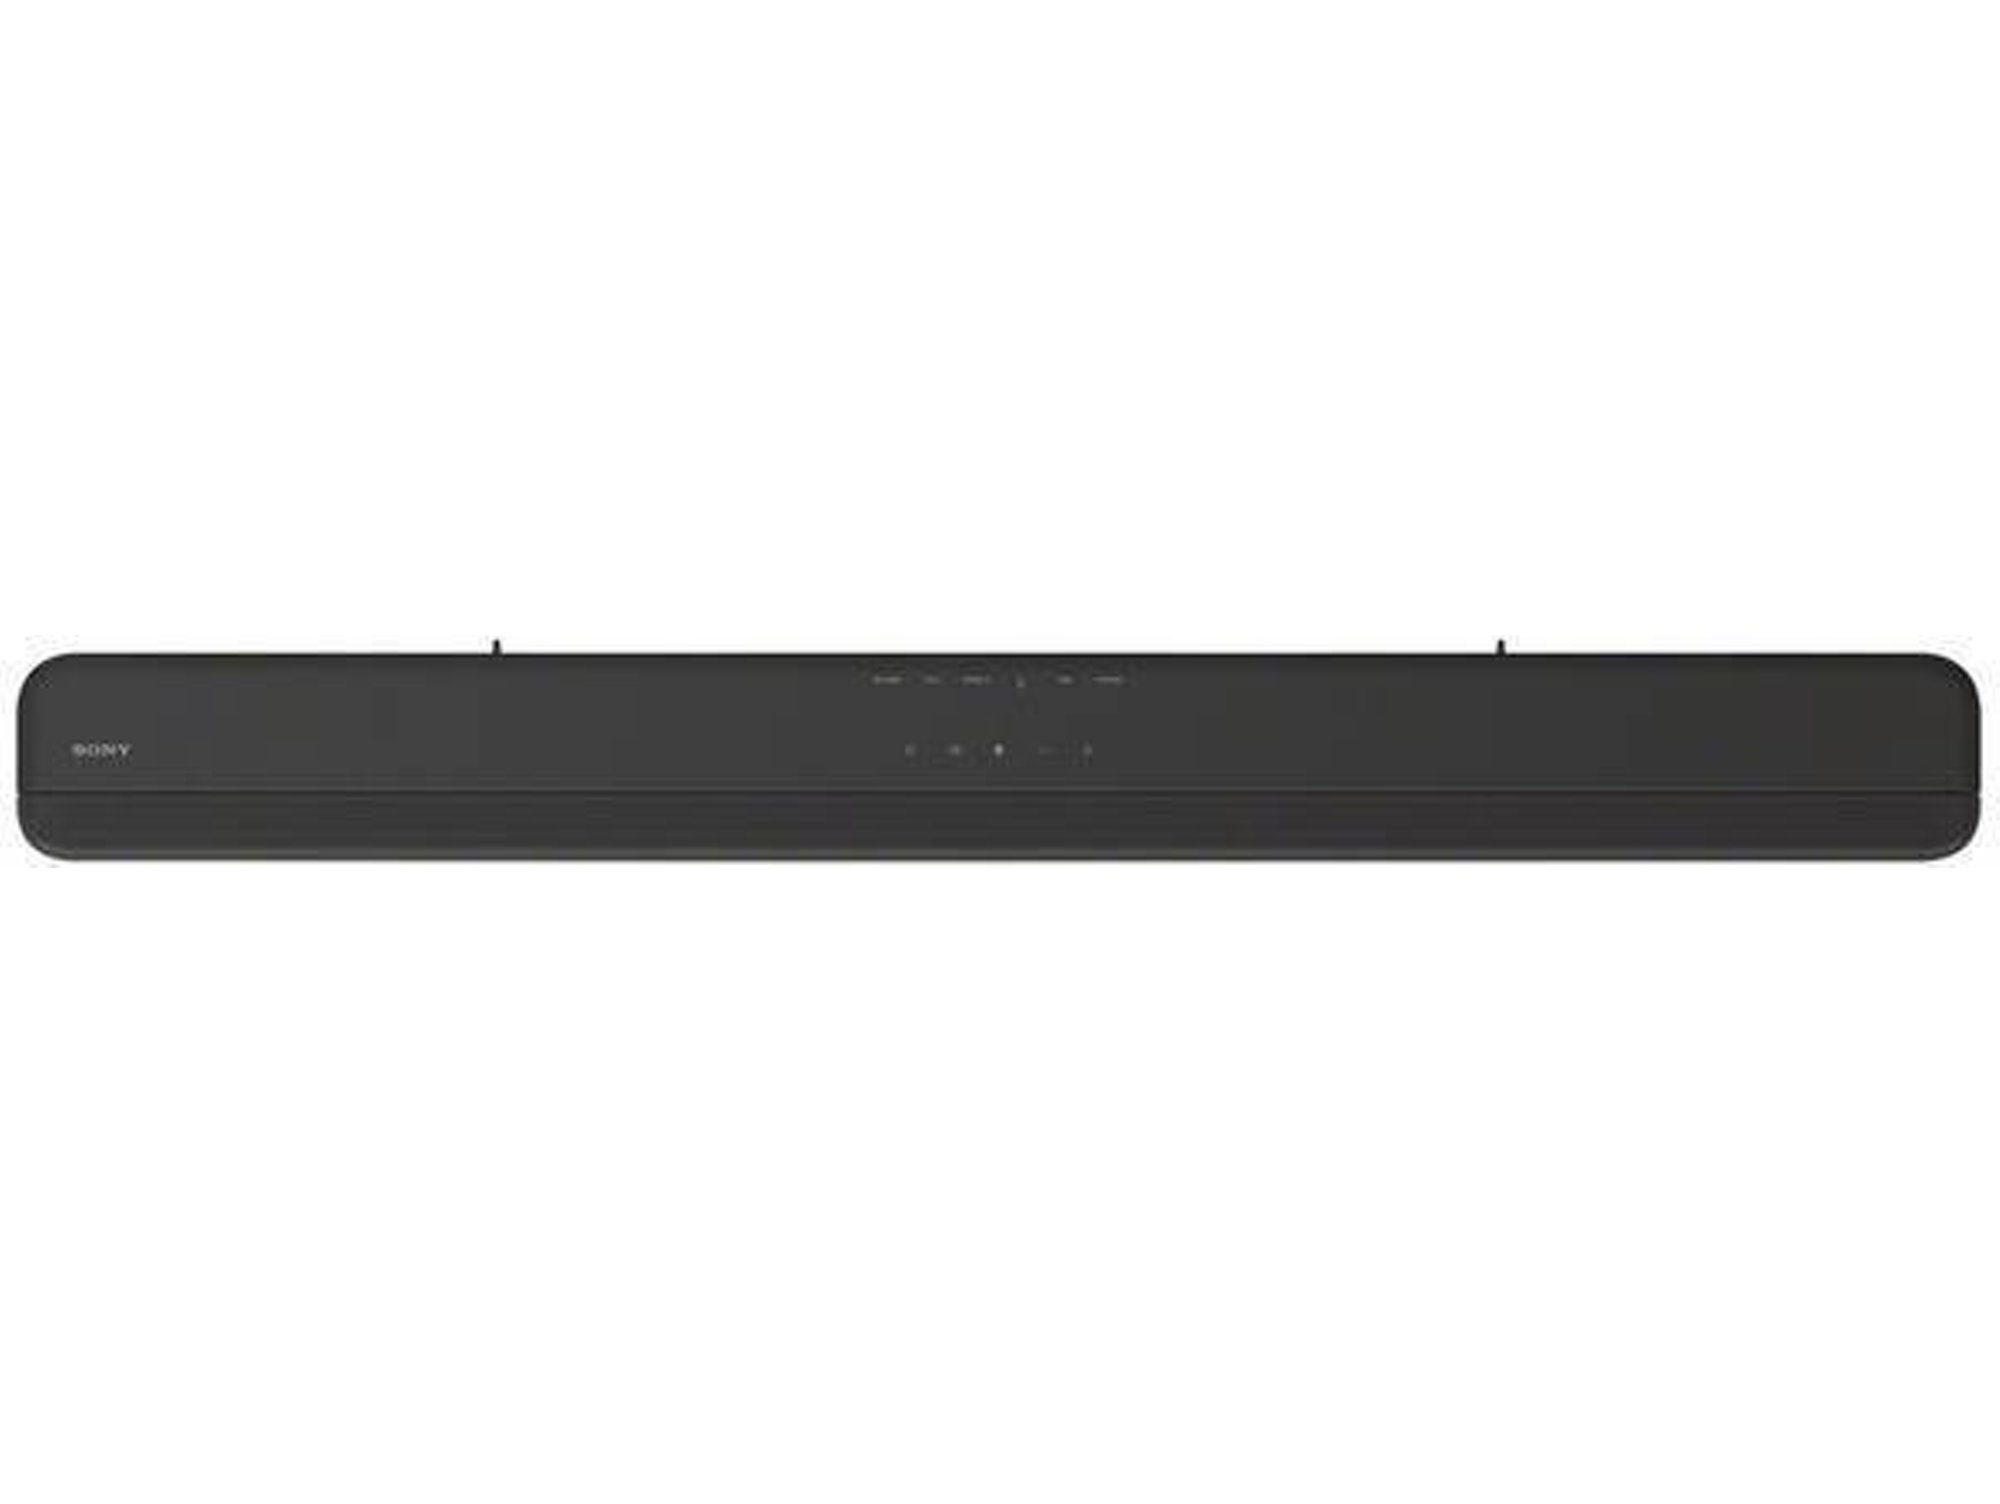 Sony Htx8500 Barra de 2.1ch dolby atmos dtsx bluetooth sforce 2.1 canales x vertical surround engine negro 128 w subwoofer incorporado integrado graves profundos hdcp 2.3 para 4k hdr compacta y elegante 128w